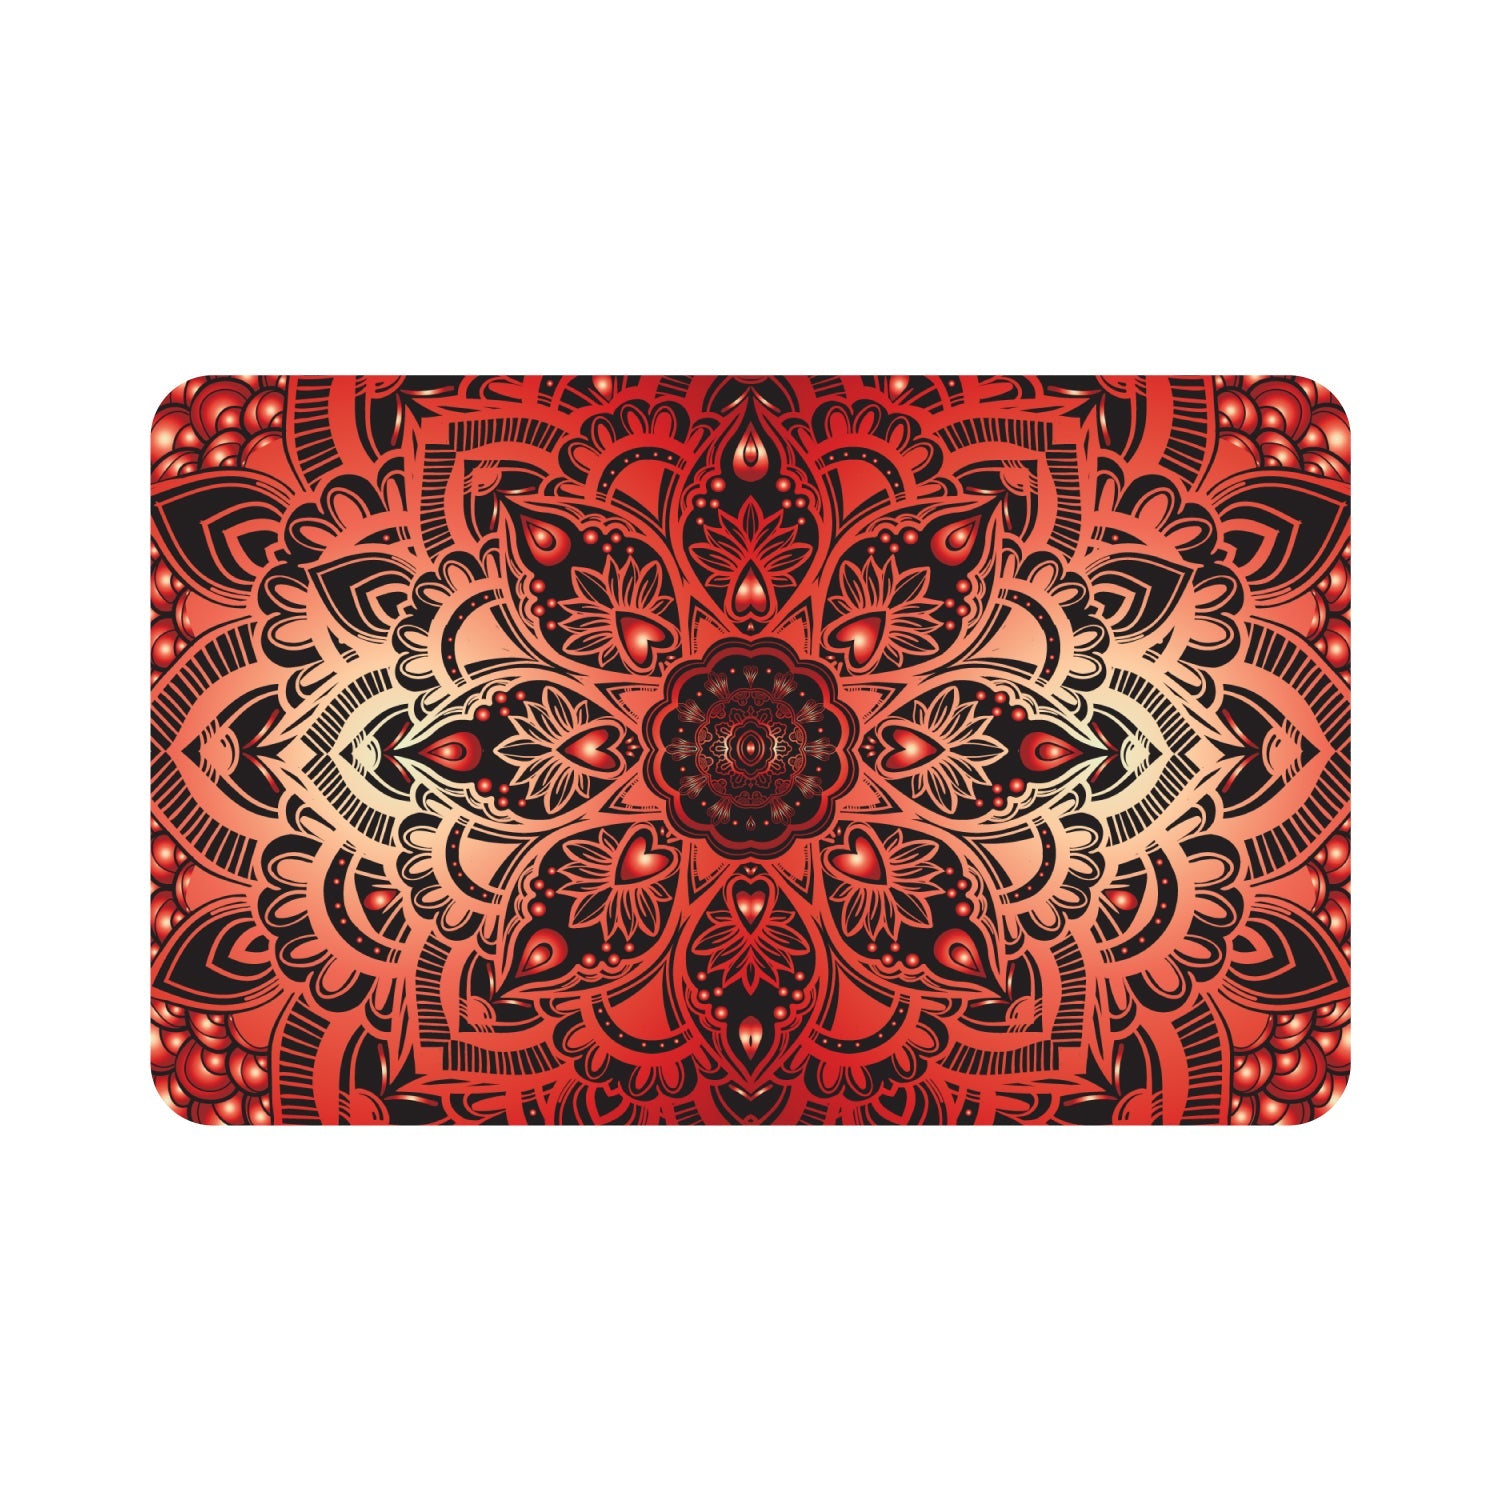 OTM Essentials Prints Series Mouse Pad, Mandala Heart Orange & Red